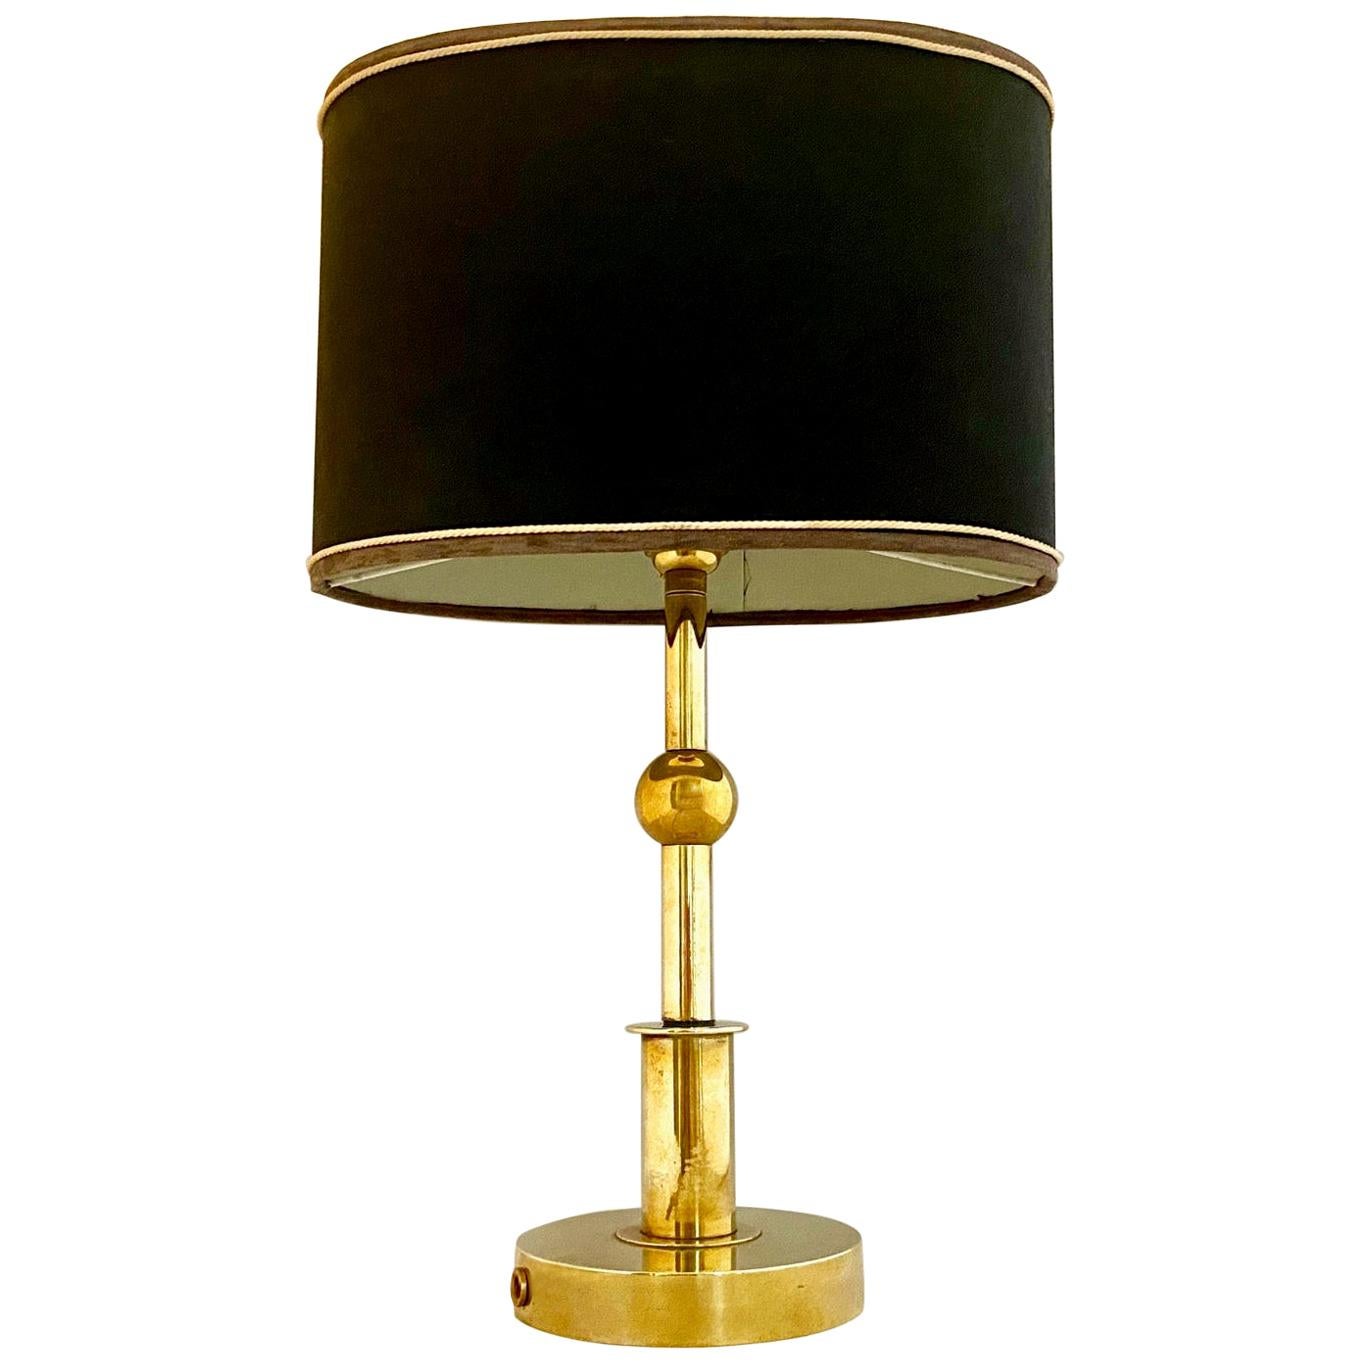 Vintage Midcentury Brass Table or Desk Lamp in the manner of Borsani